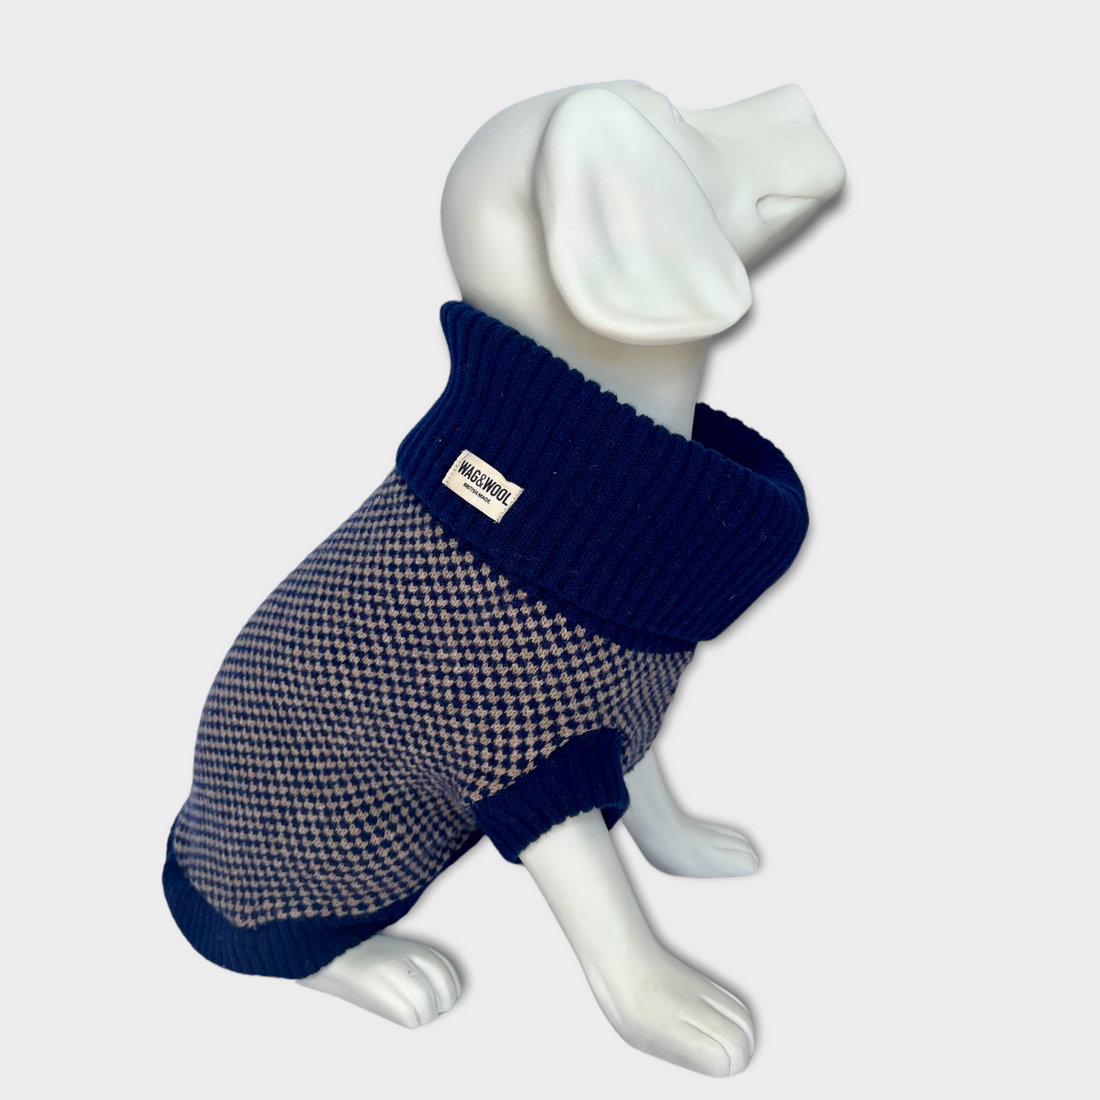 mannequin in a navy dog jumper 